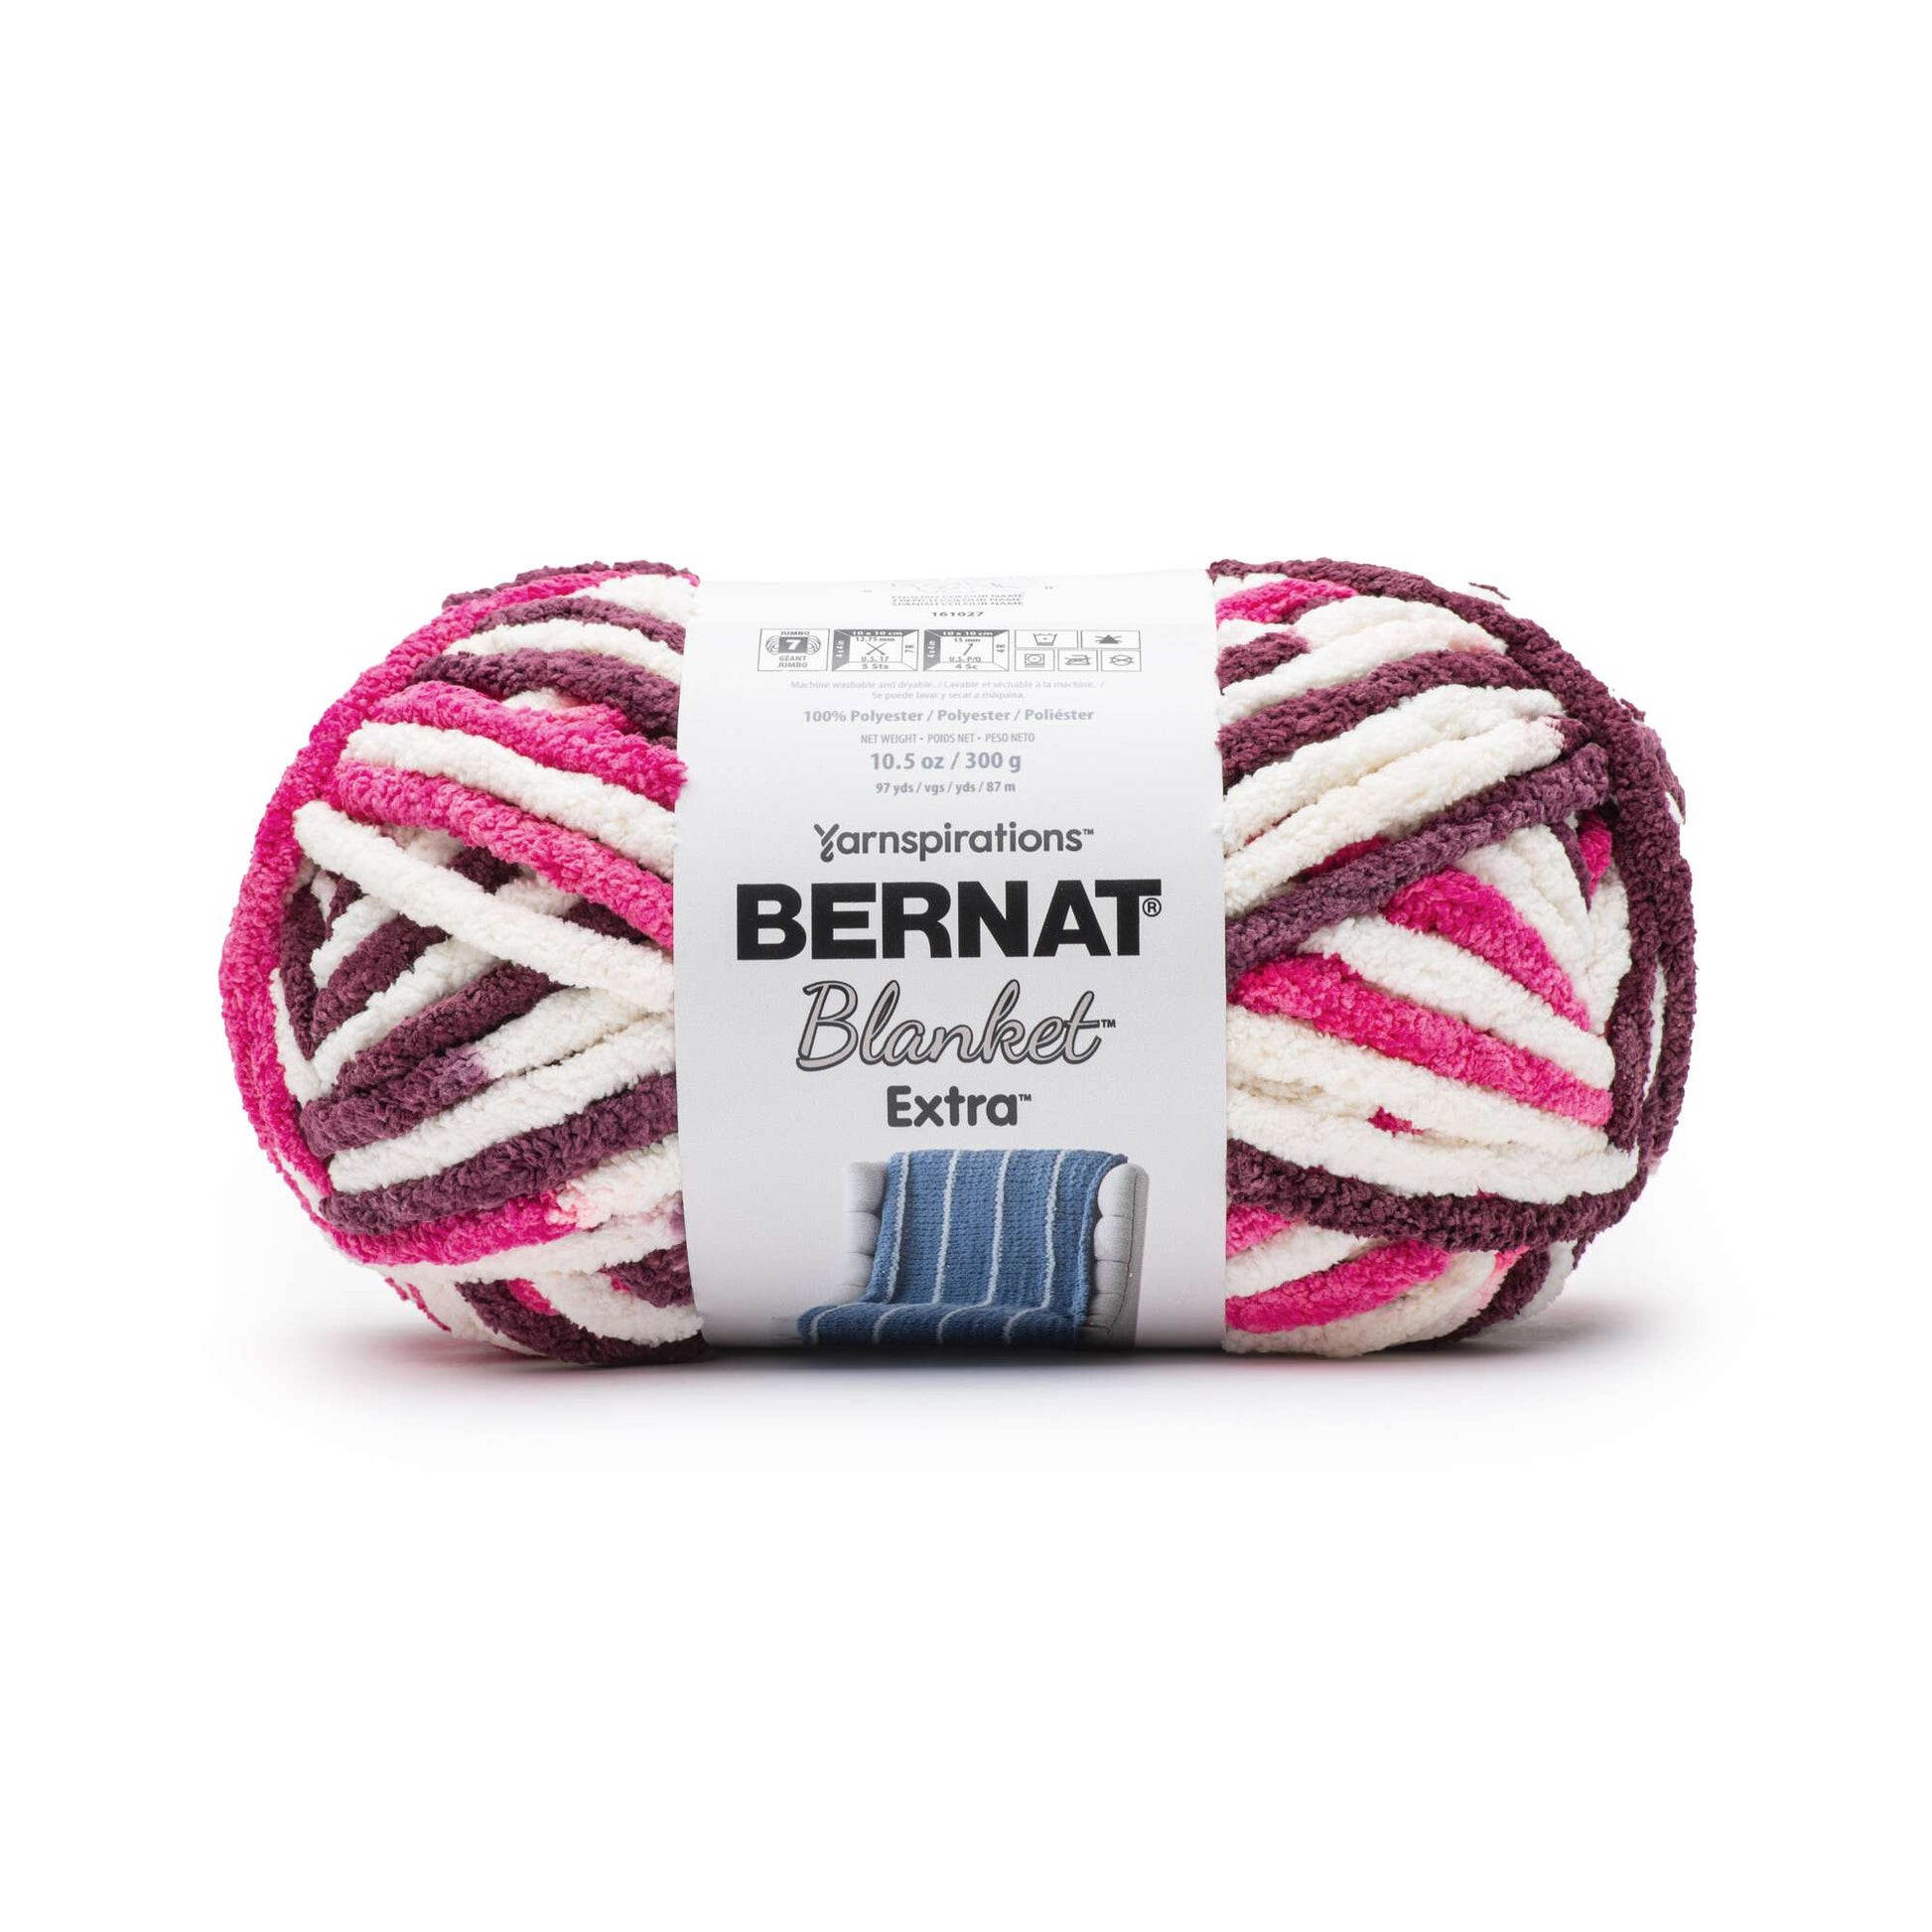 Bernat Blanket Extra Yarn (300g/10.5oz) - Clearance Shades* Pinky Punk Varg